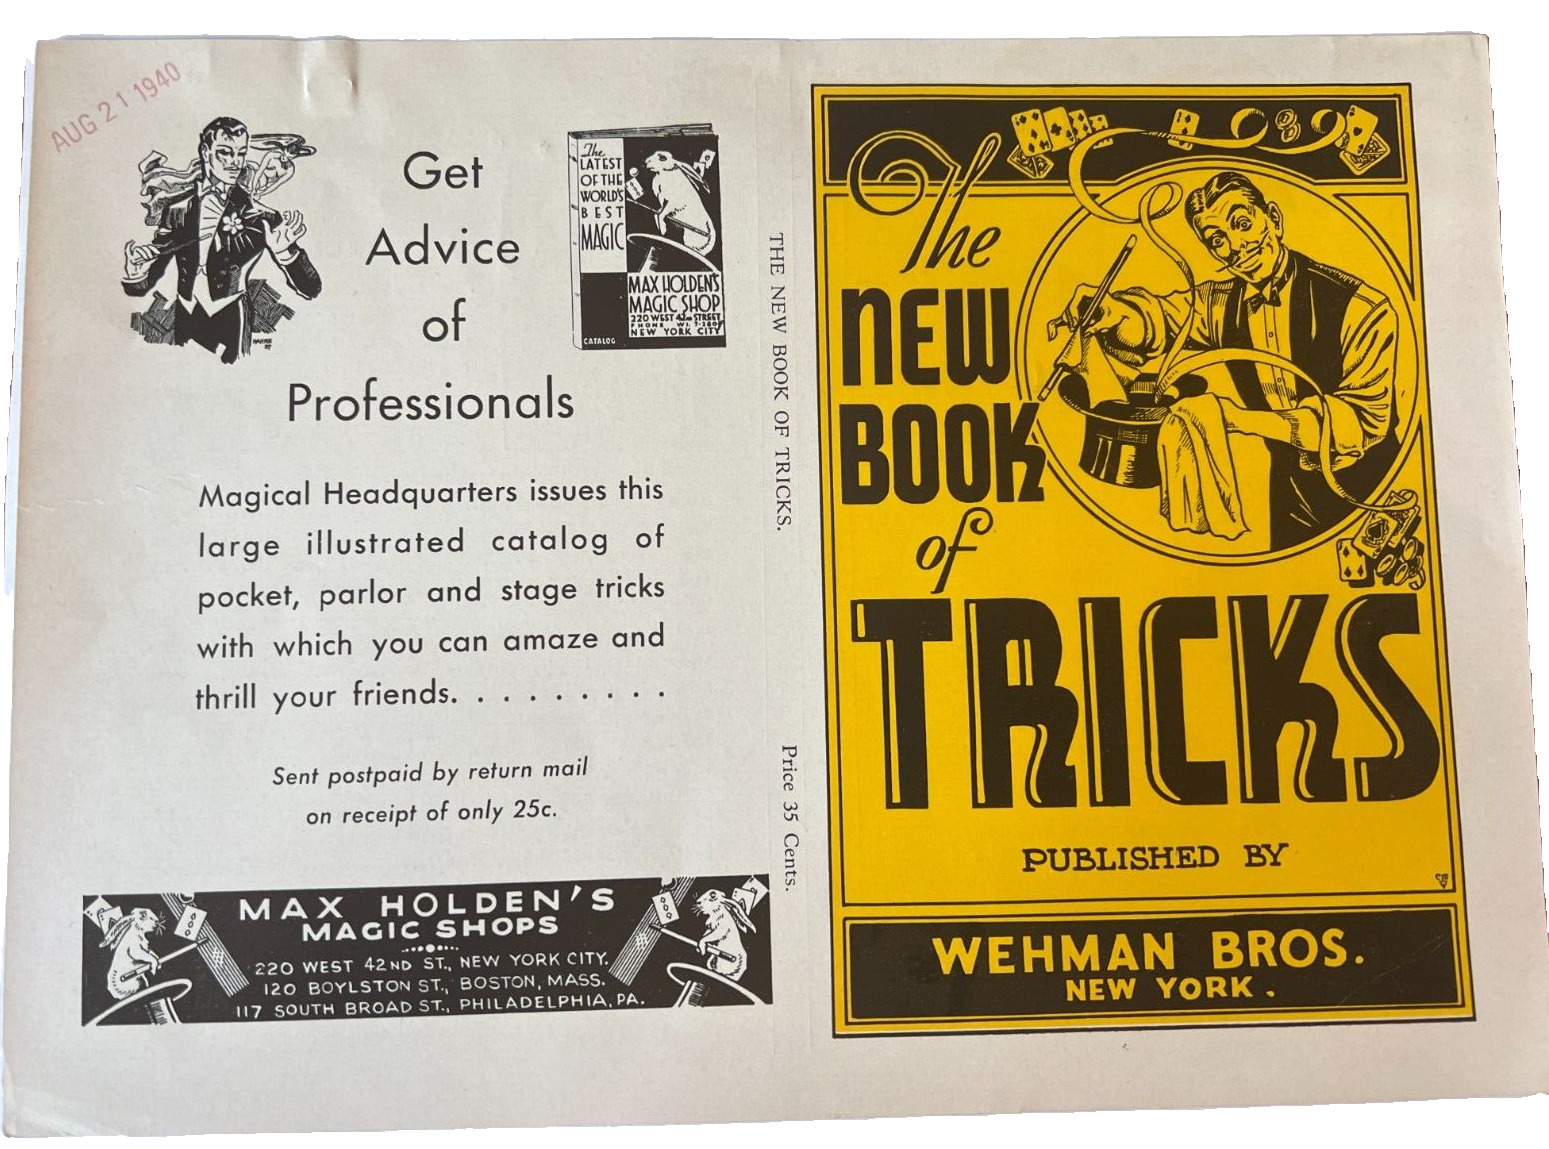 Vintage Wehman Bros Book Cover Sample “The New Book Of Tricks” Magic Circa 1940